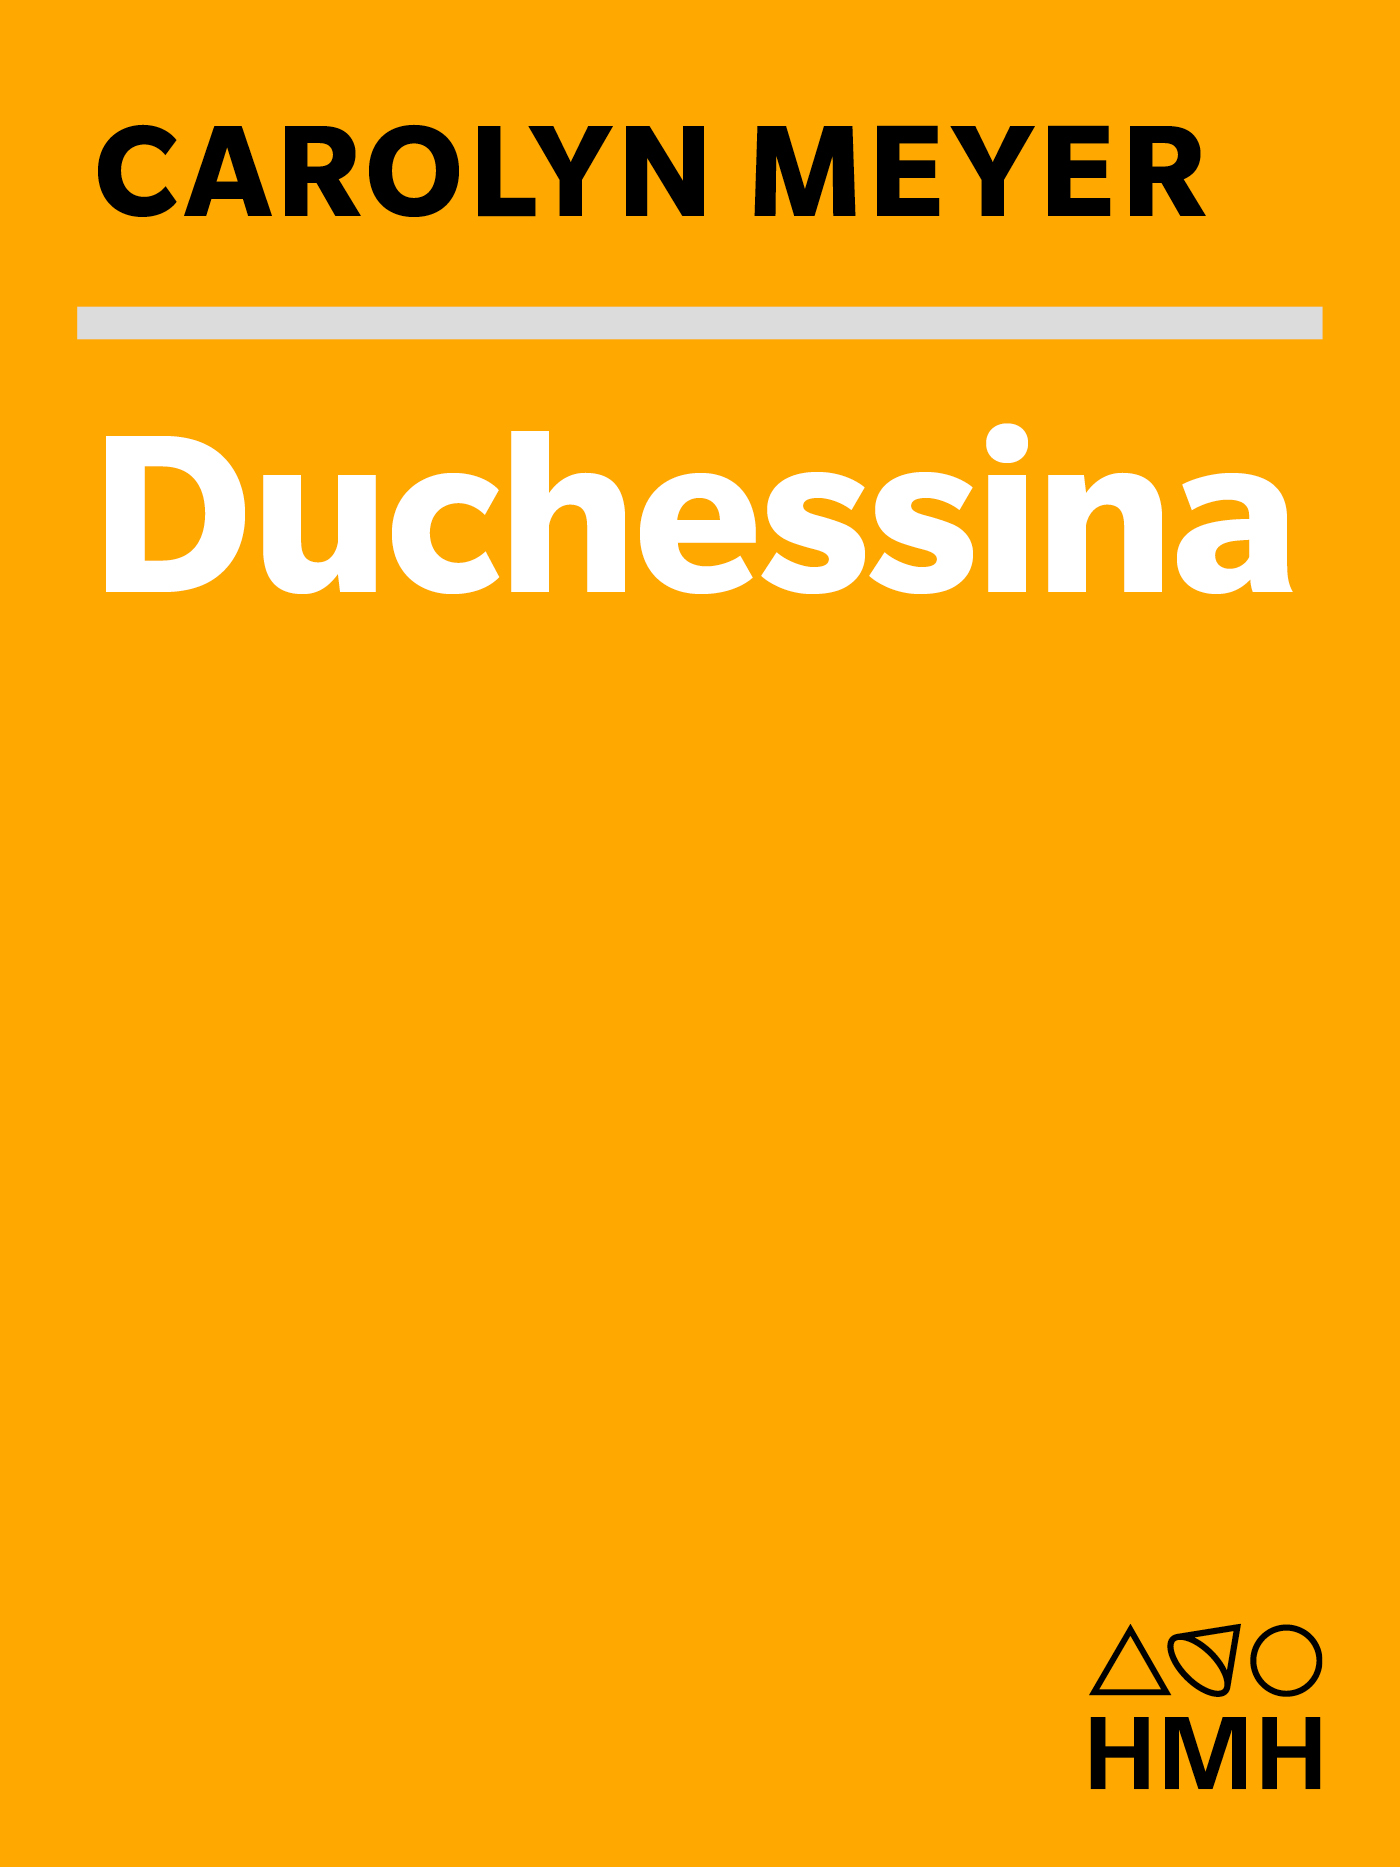 Duchessina -  A Novel of Catherine de' Medici by Carolyn Meyer